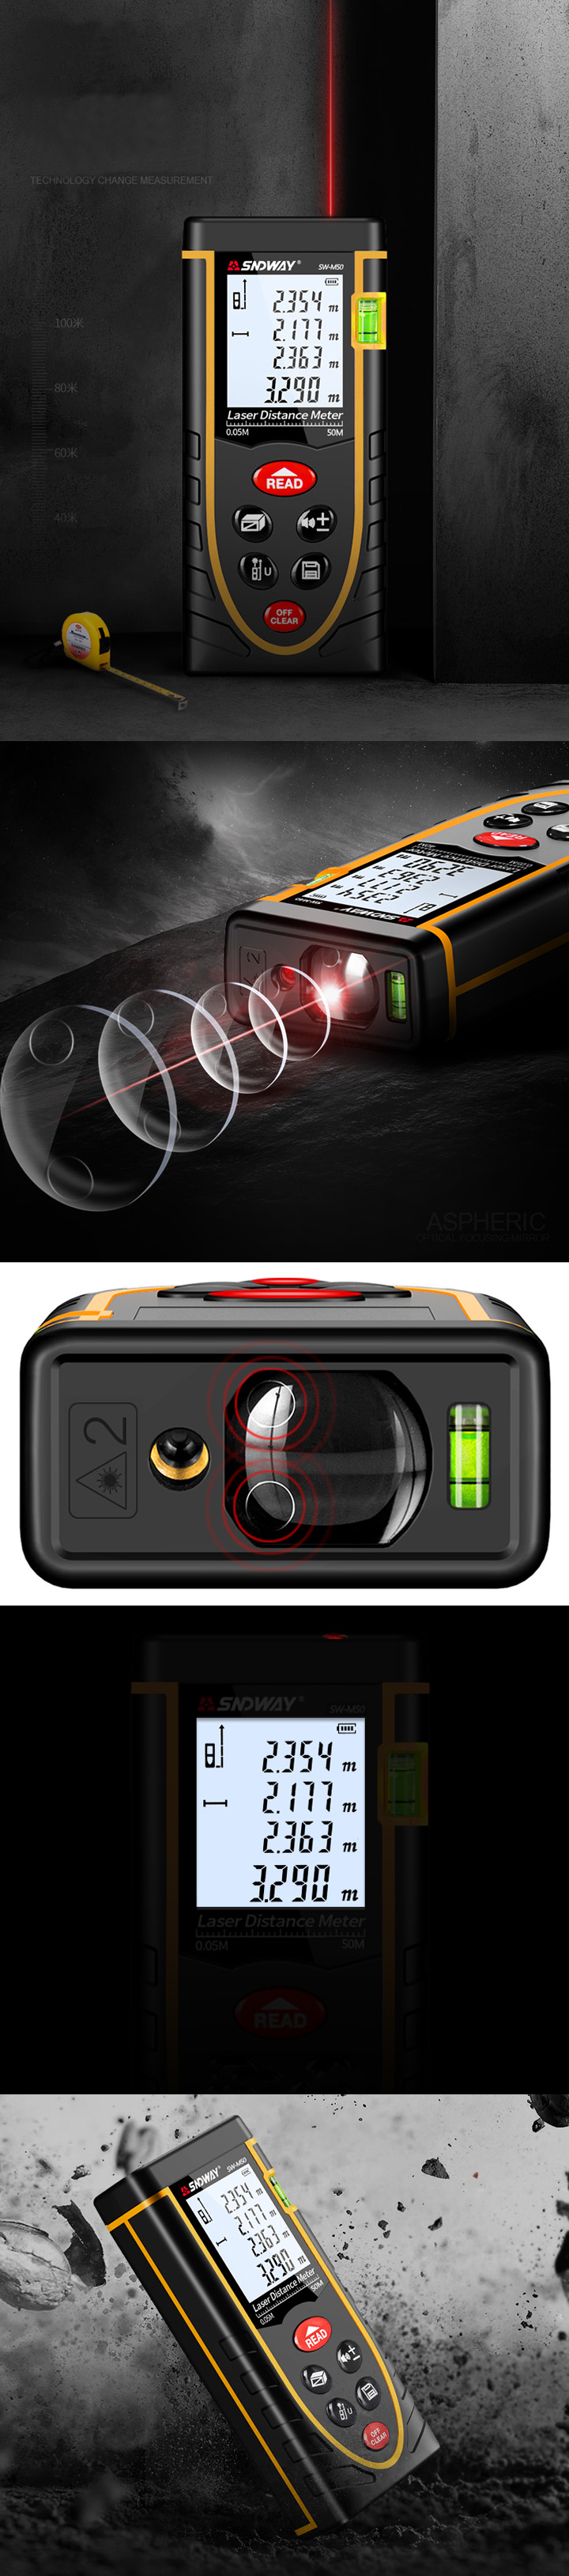 télémètre laser avec Bluetooth